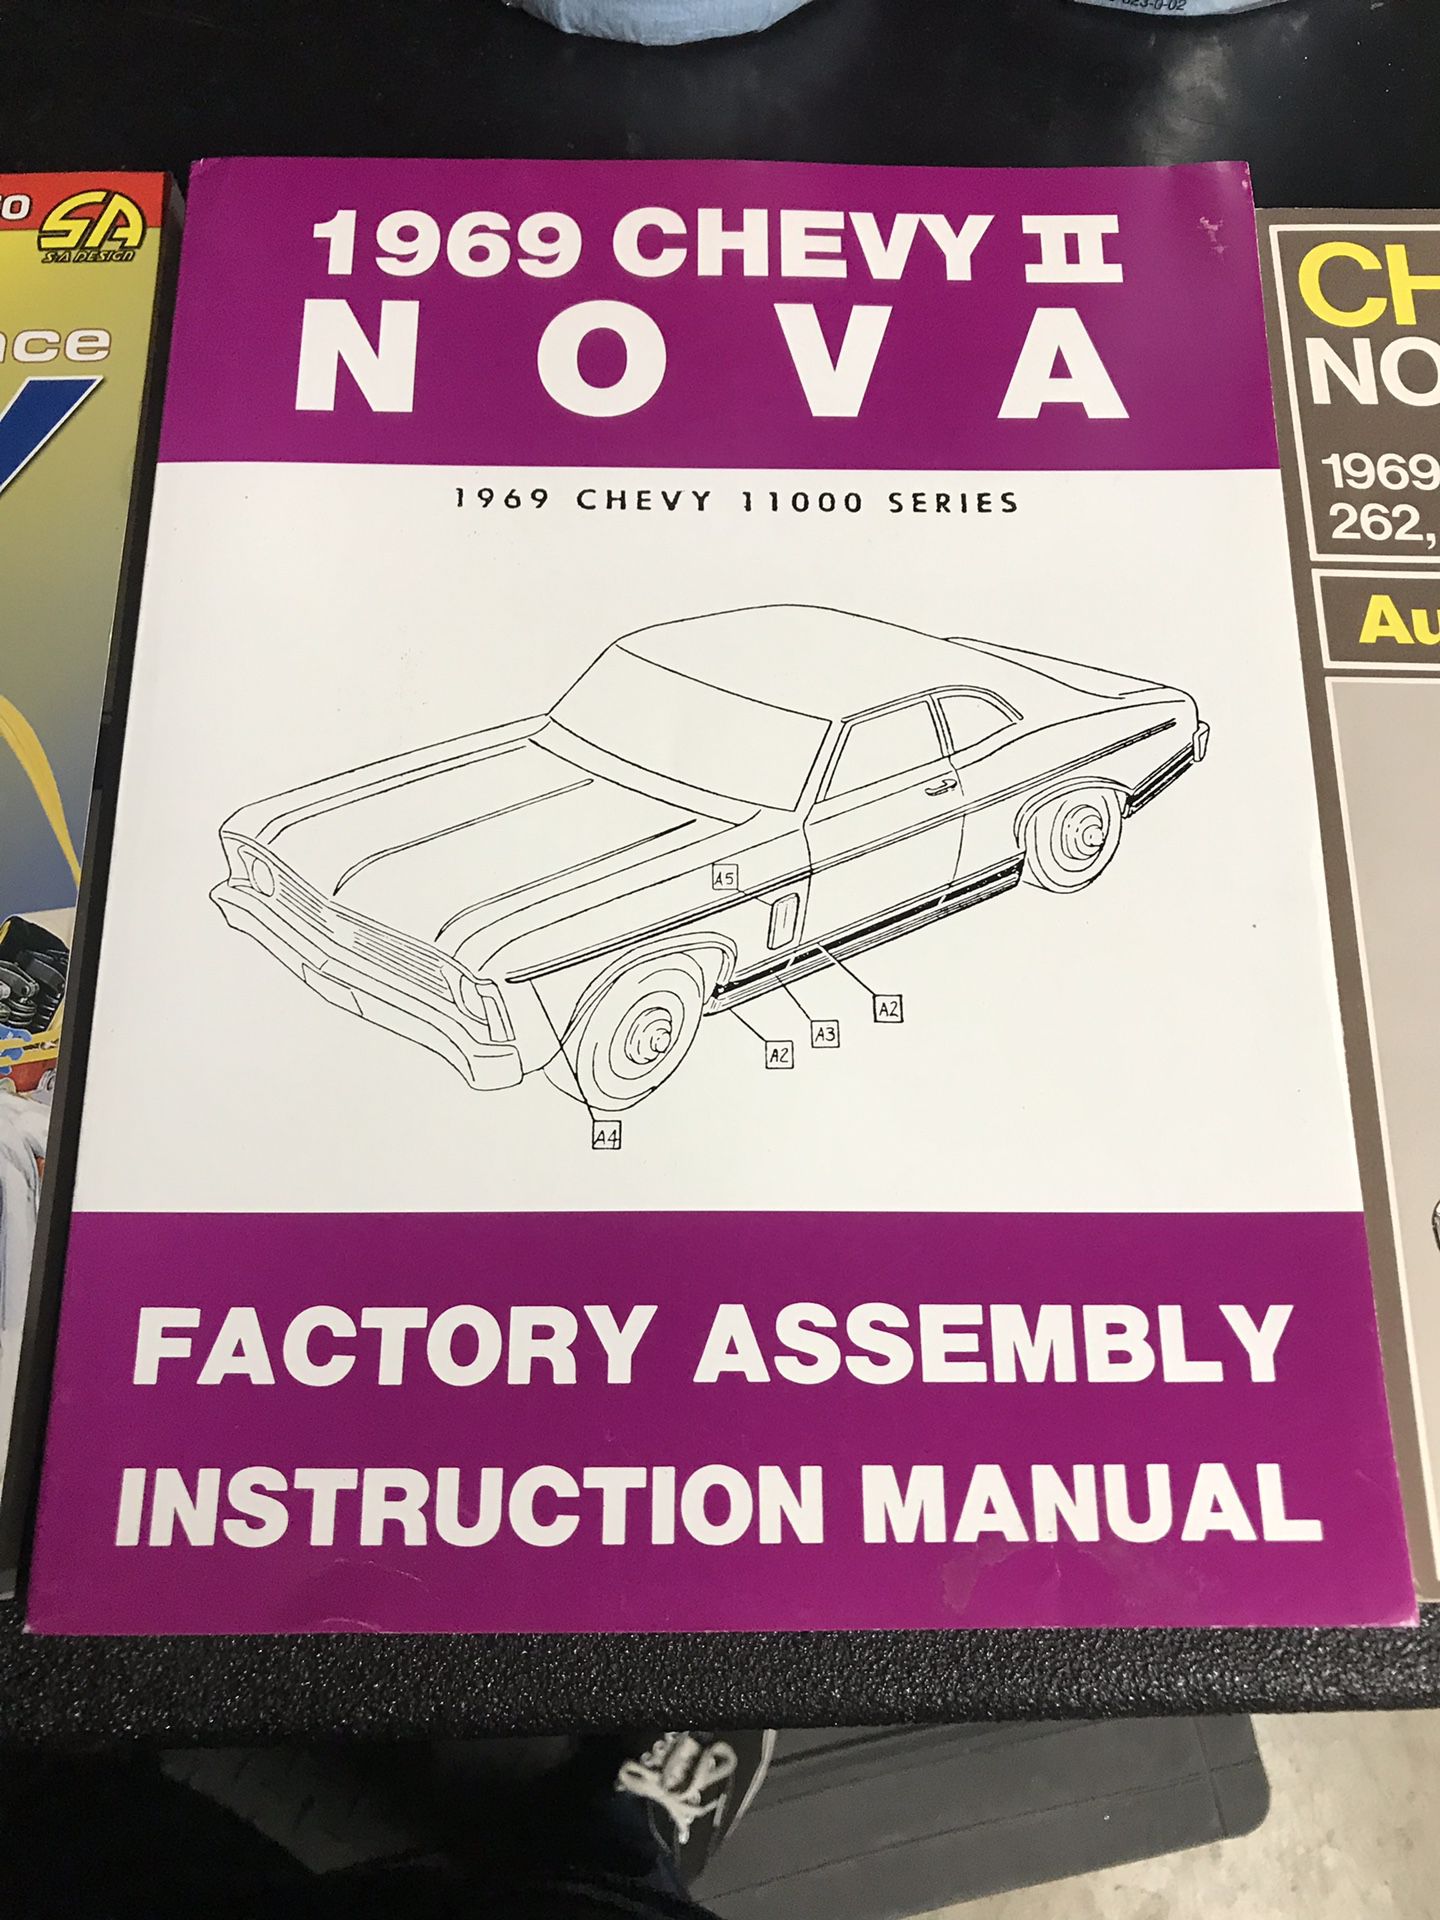 Chevy Nova manual books